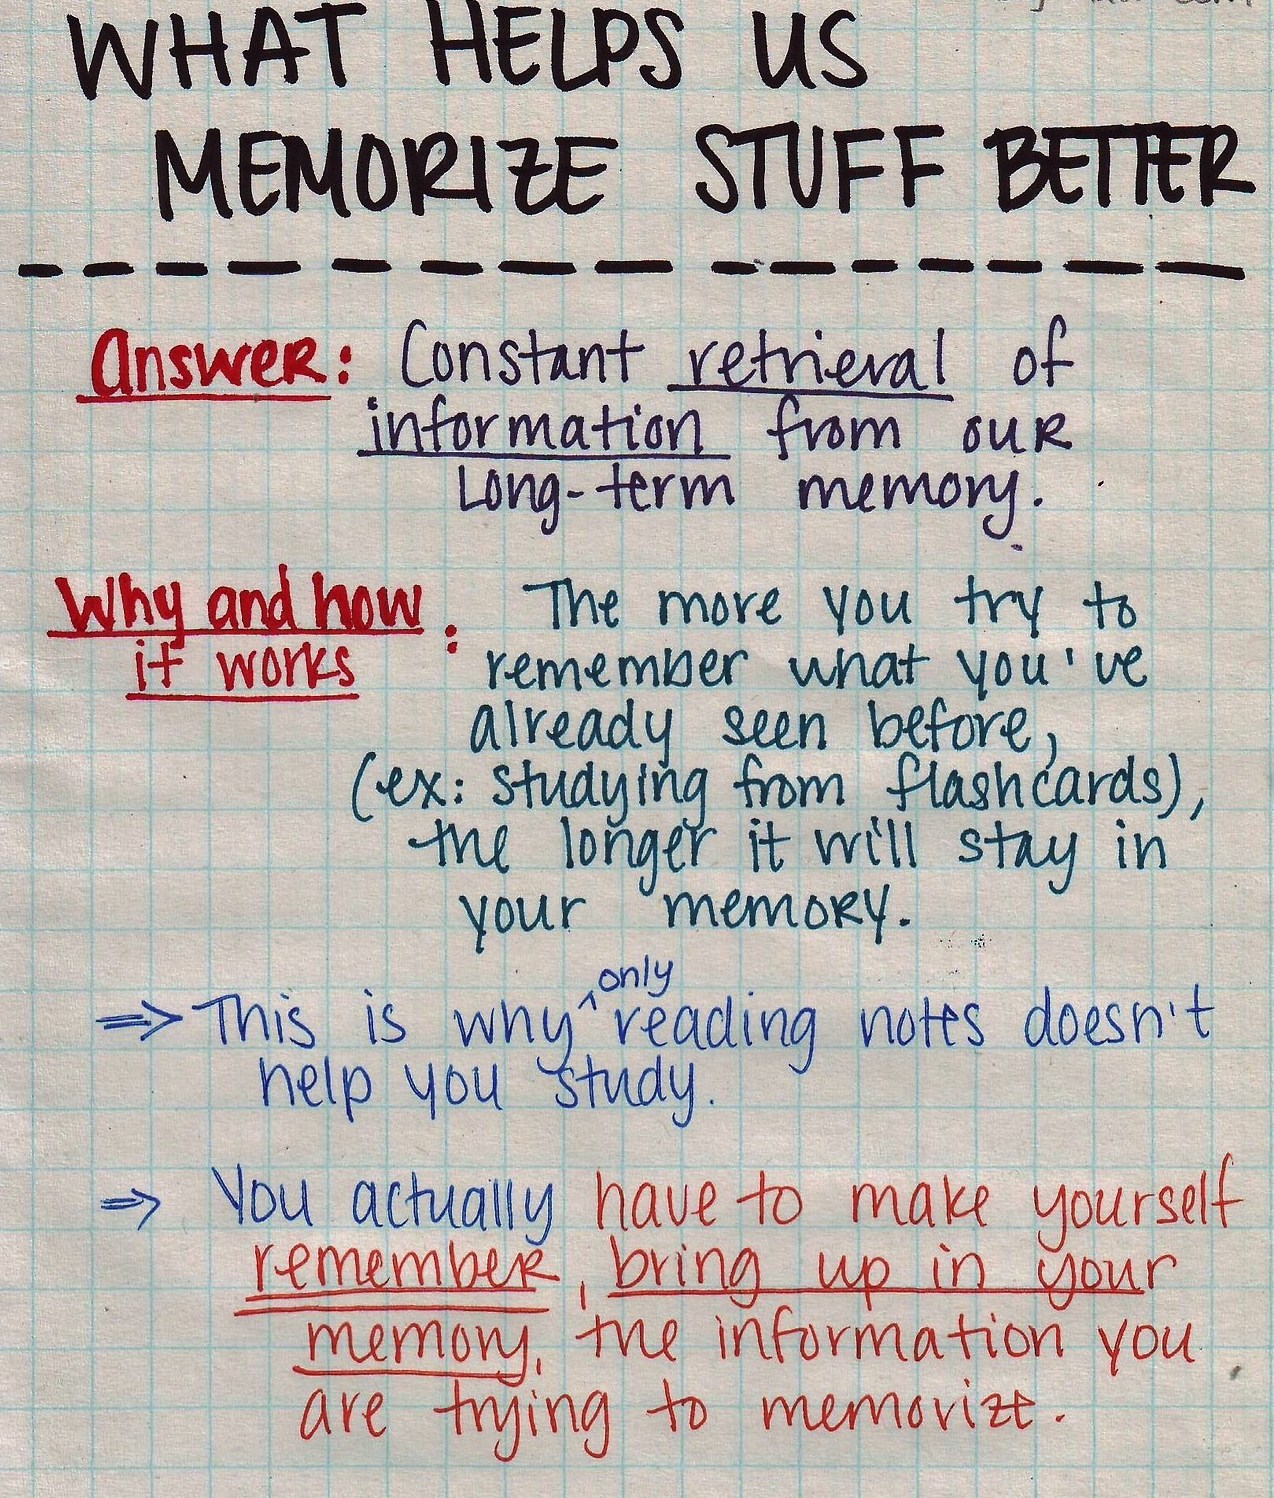 memorize, memory, Study Hacks, tips, উপায়, টিপস, পড়া, স্মৃতি